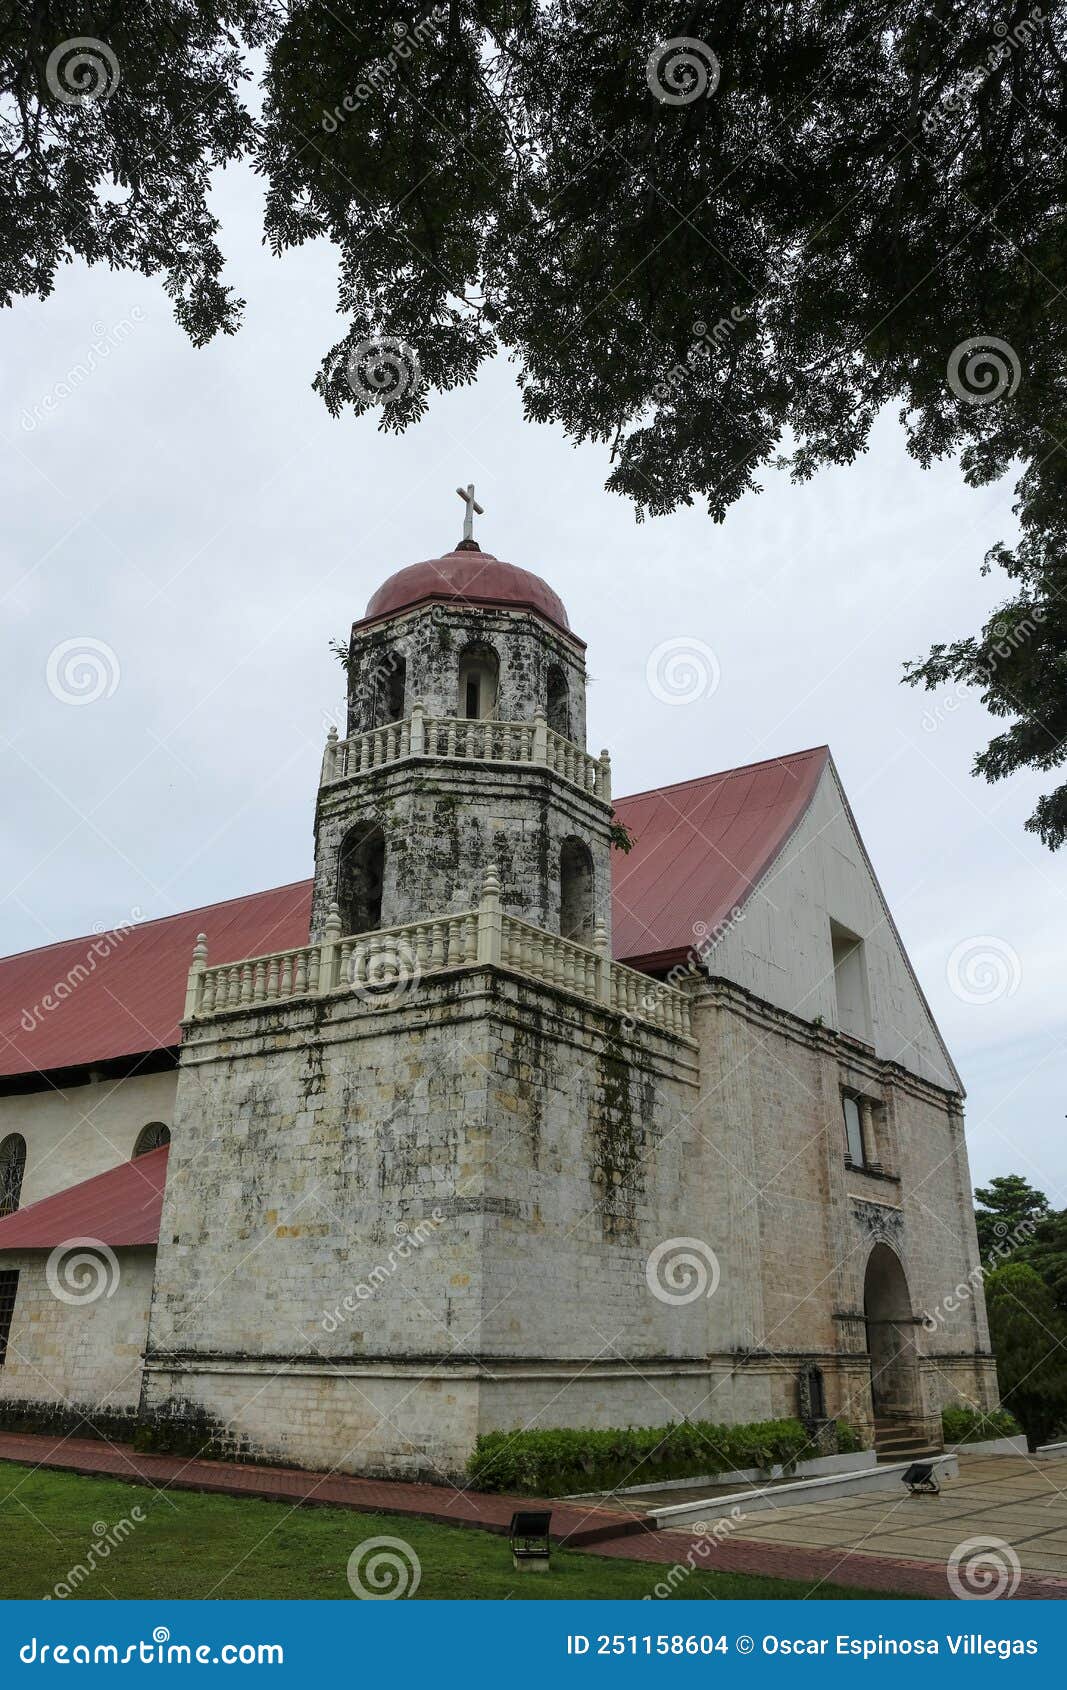 Lazi Church In Siquijor Philippines Editorial Stock Image Image Of